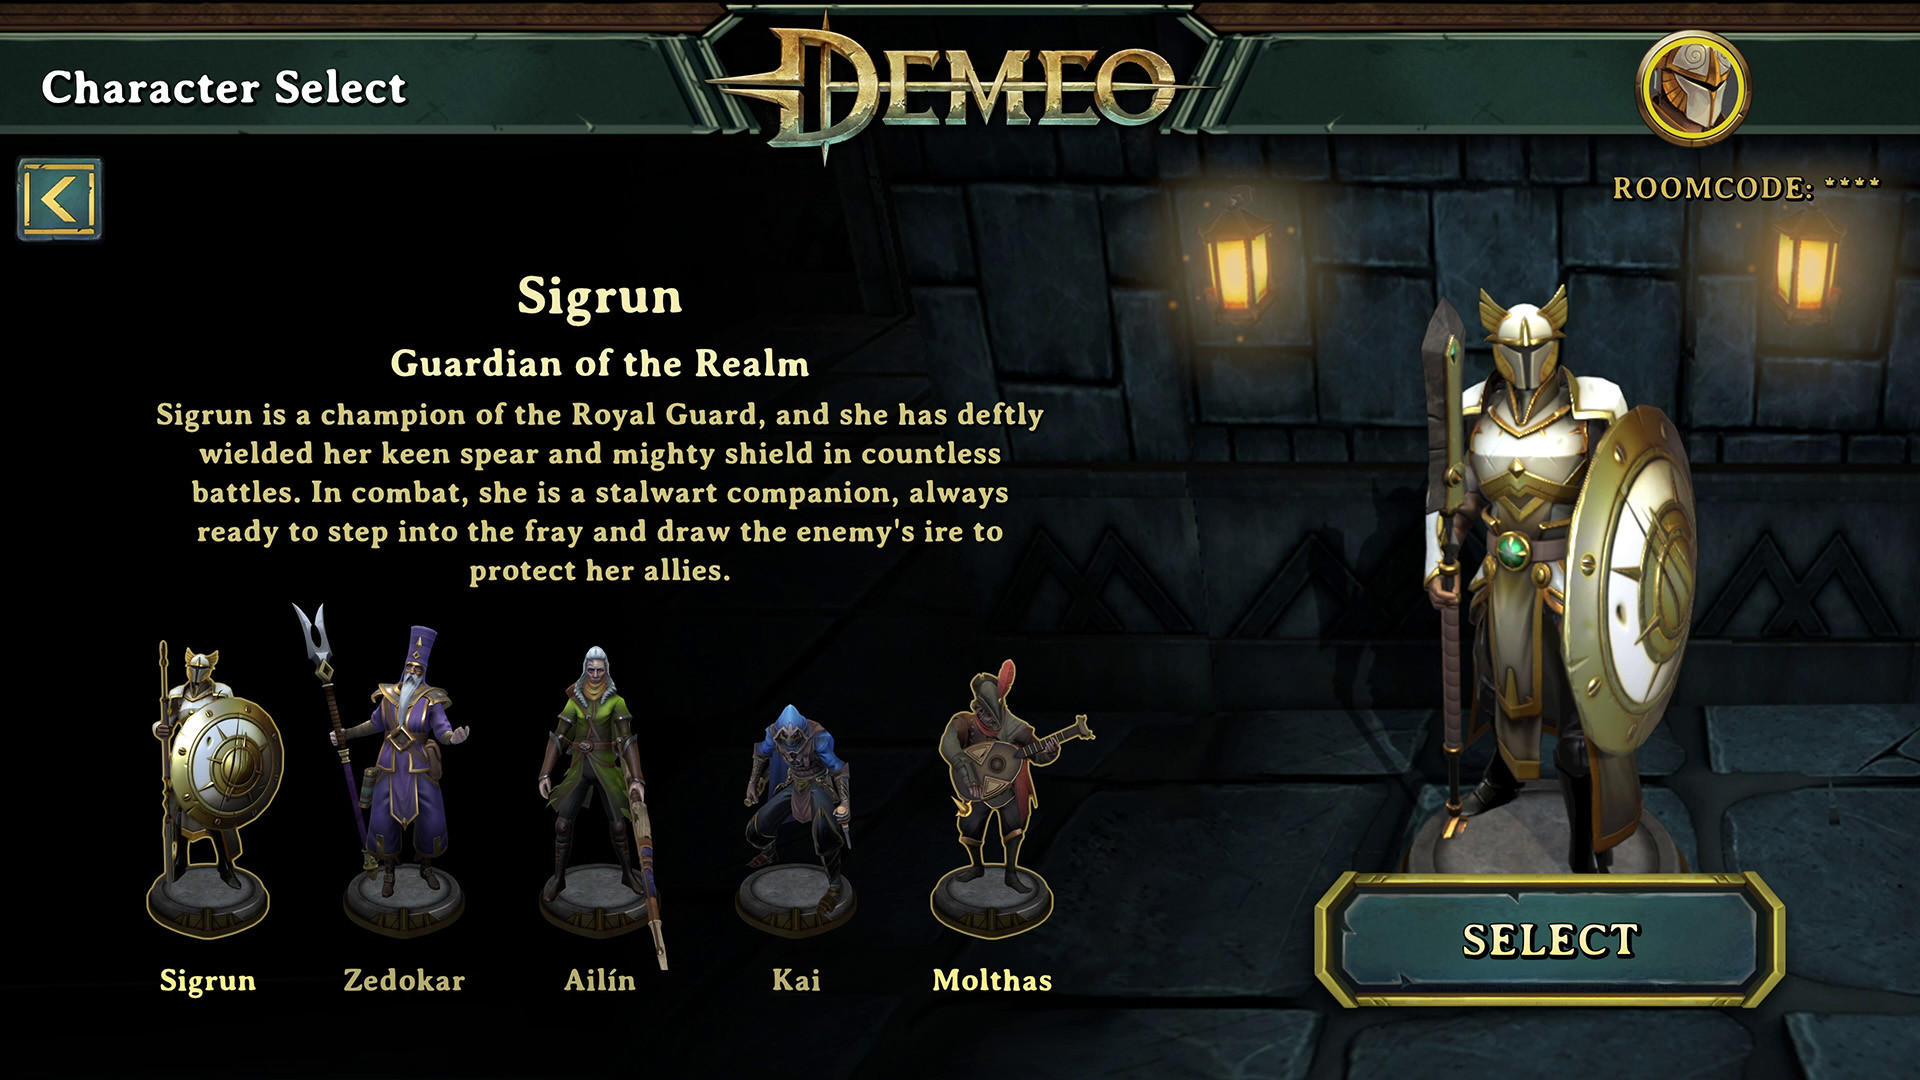 Demeo: PC Edition Steam CD Key